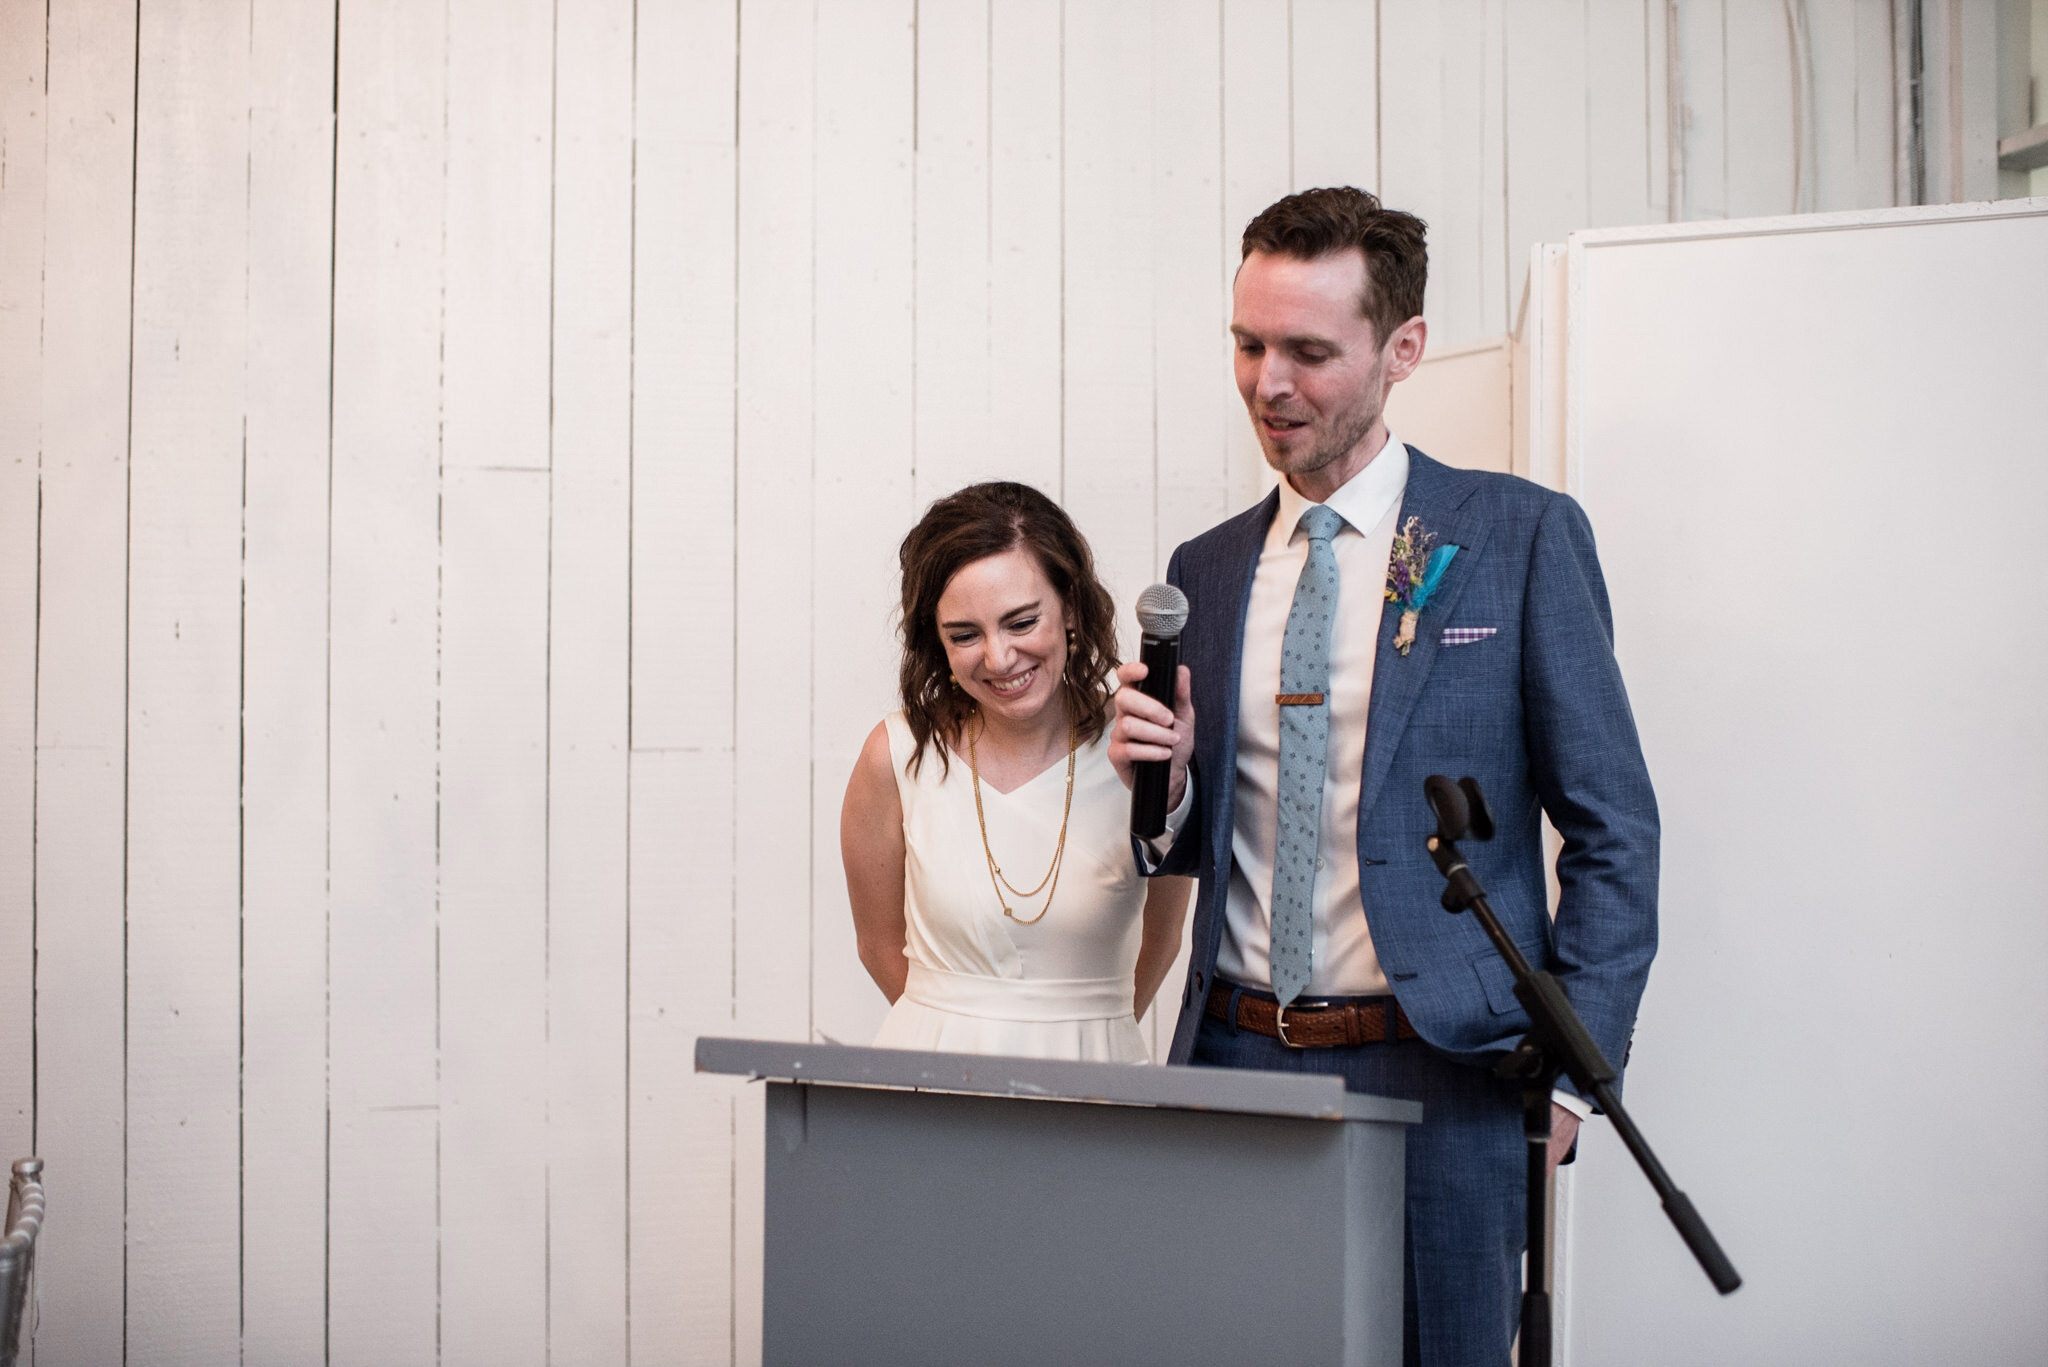 792-bride-groom-speech-wedding-berkeley-fieldhouse-toronto-downtown-events-photos.jpg